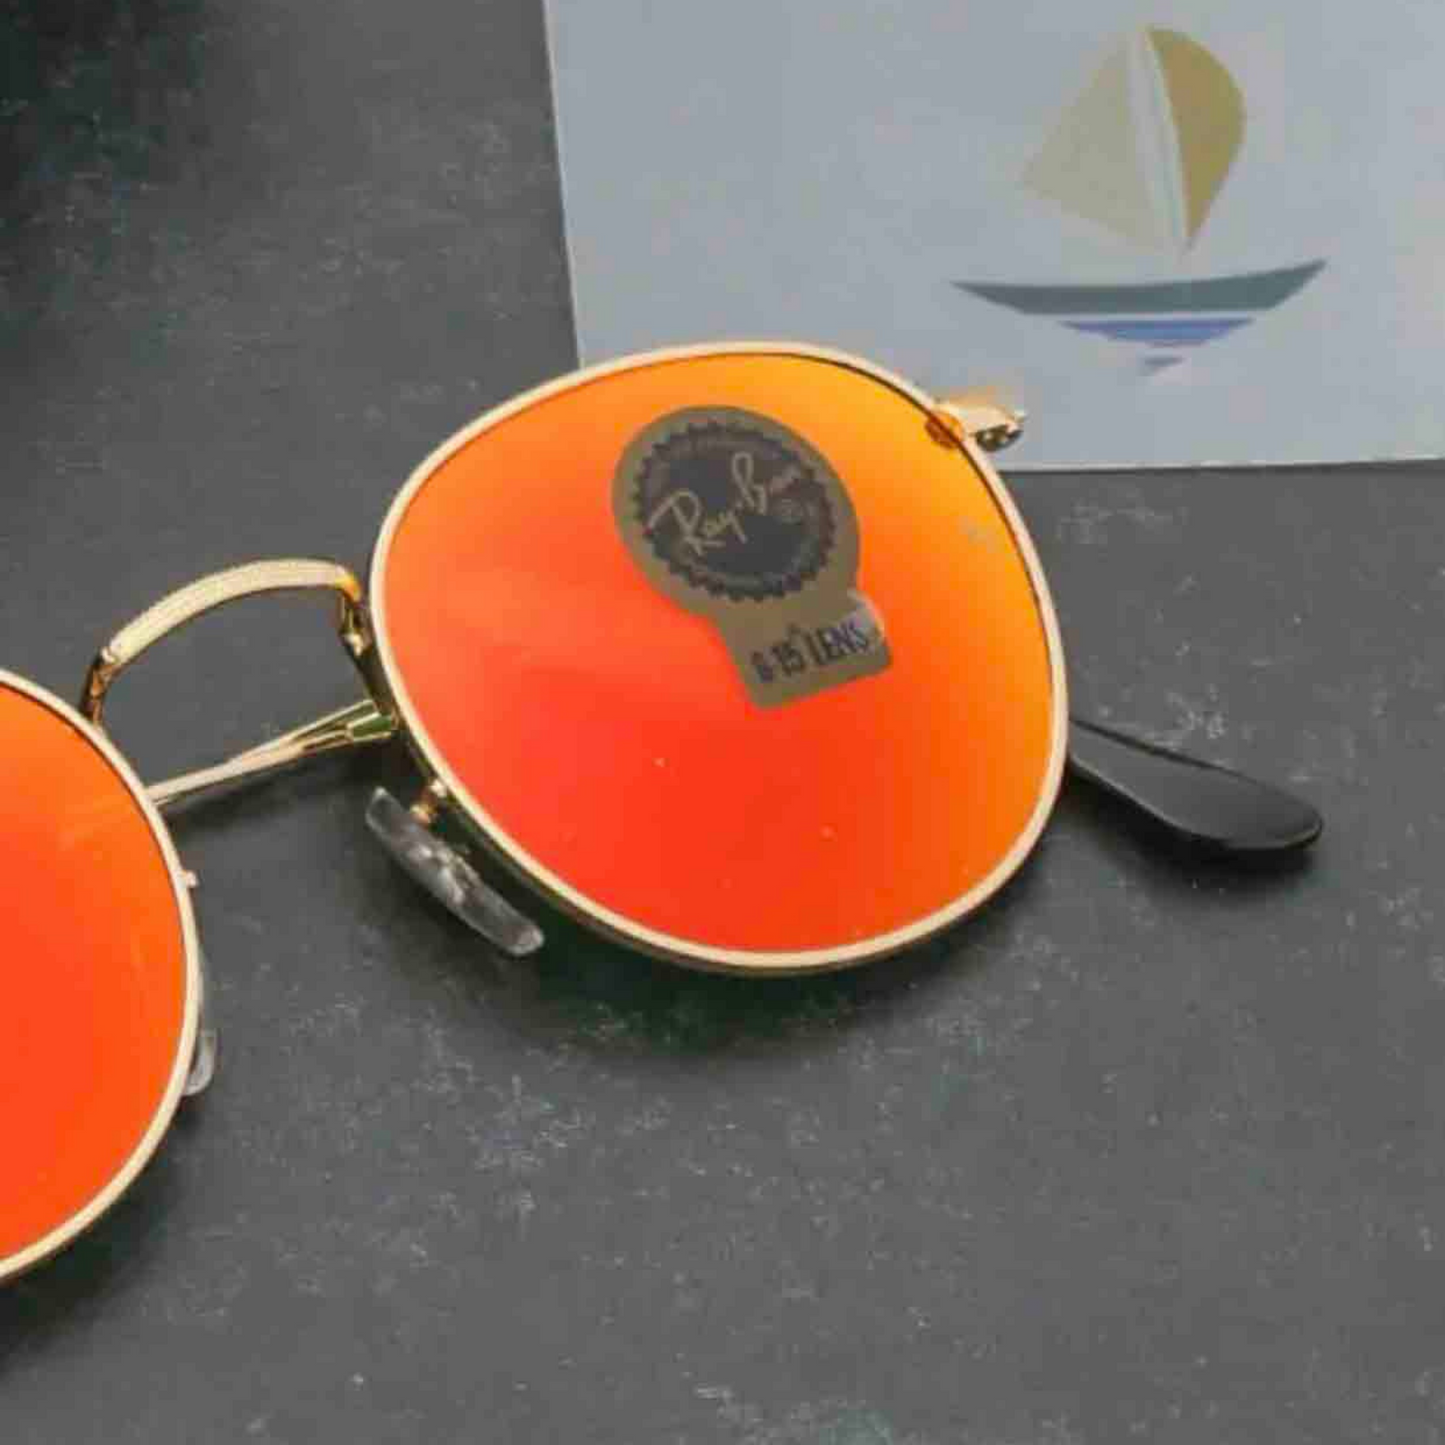 New Stylish Attractive Orange & Gold 3447 Round Sunglass For Unisex